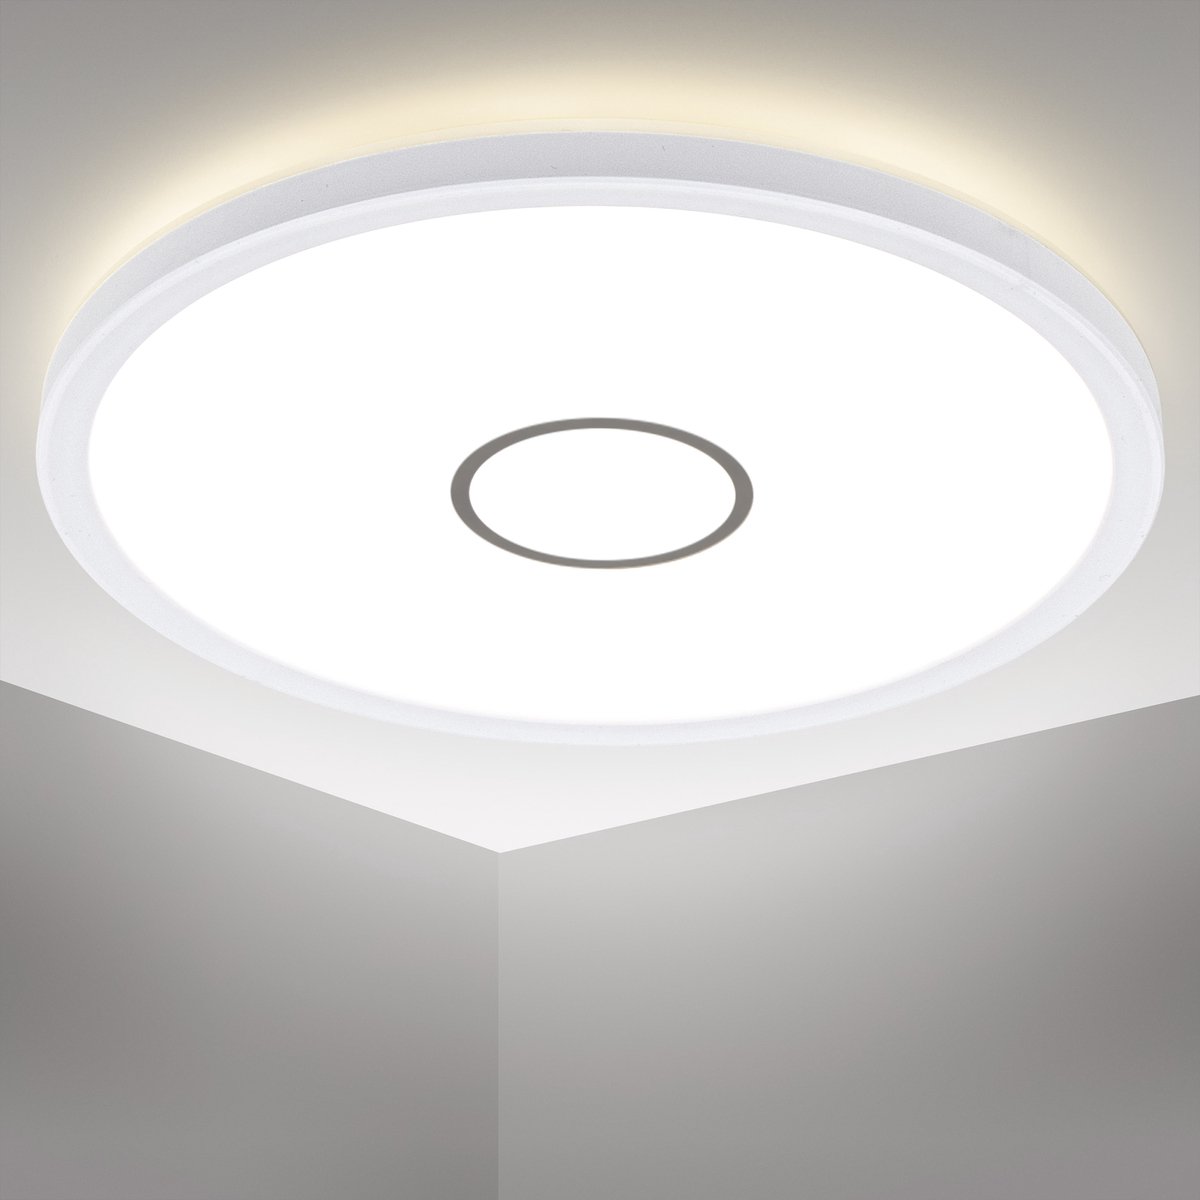 kreupel Alabama Grit B.K.Licht LED plafondlamp - neutraal wit licht - ultravlak 28mm Ø29cm |  bol.com